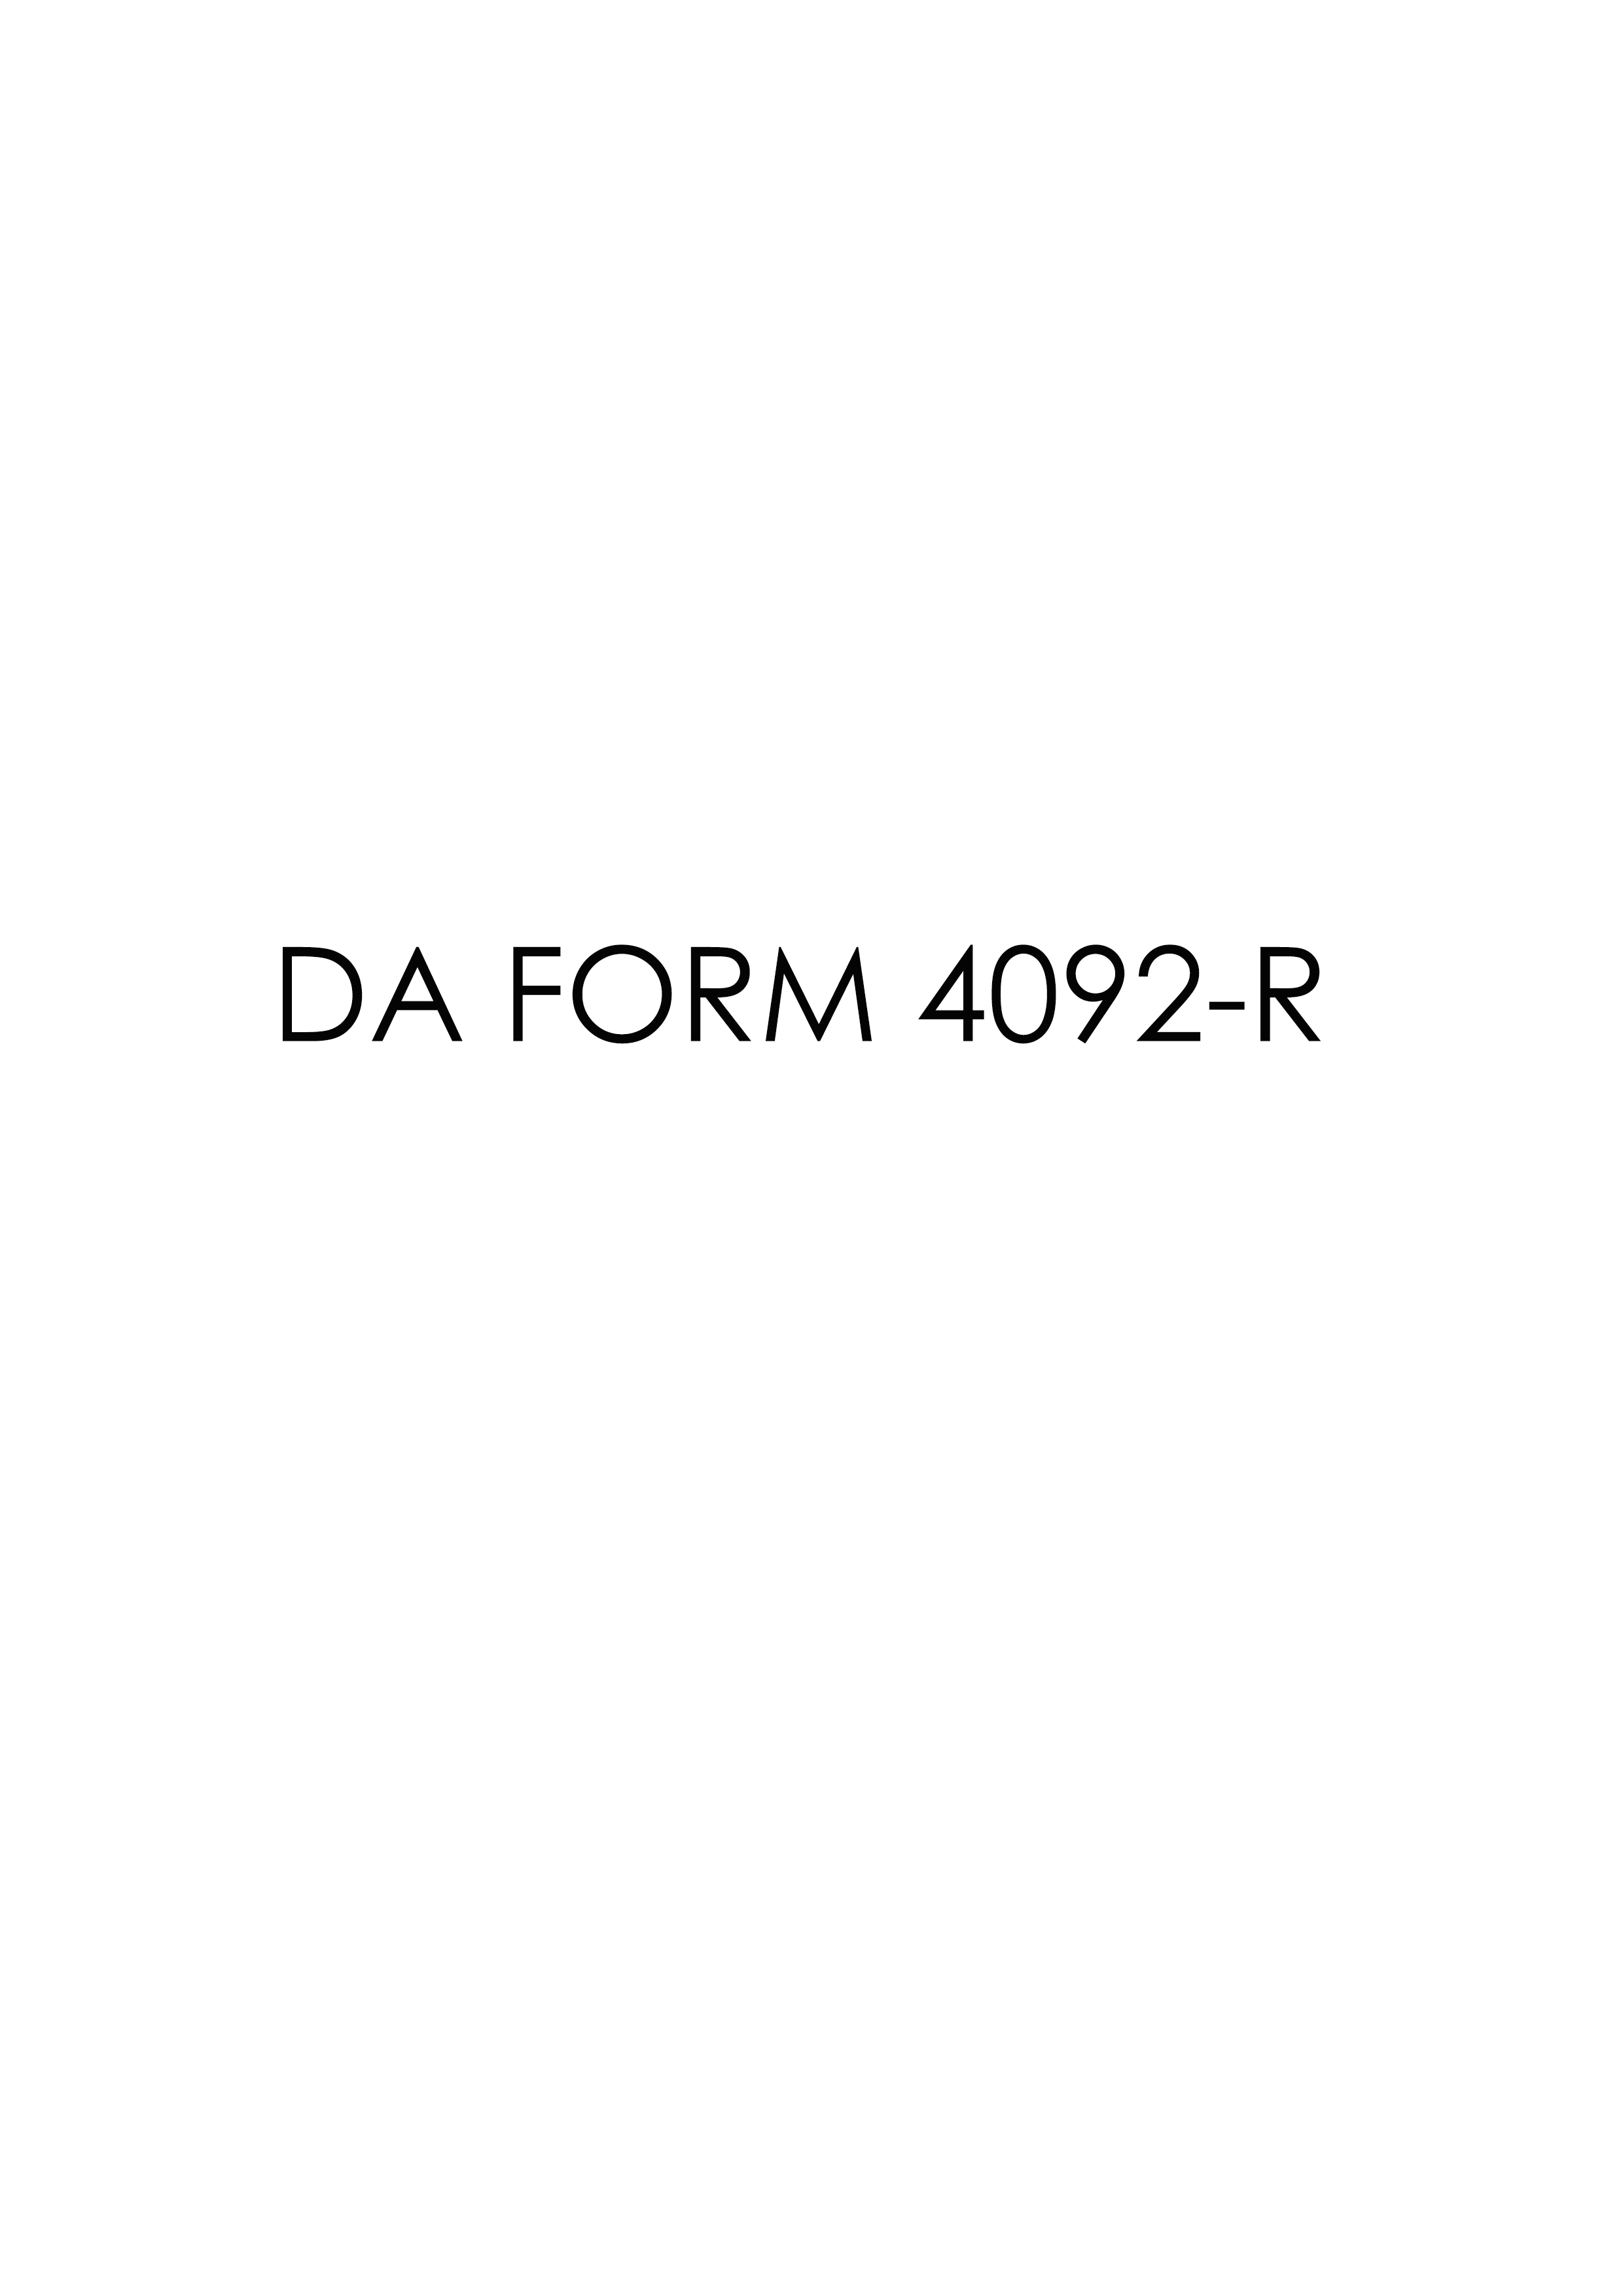 da Form 4092-R fillable